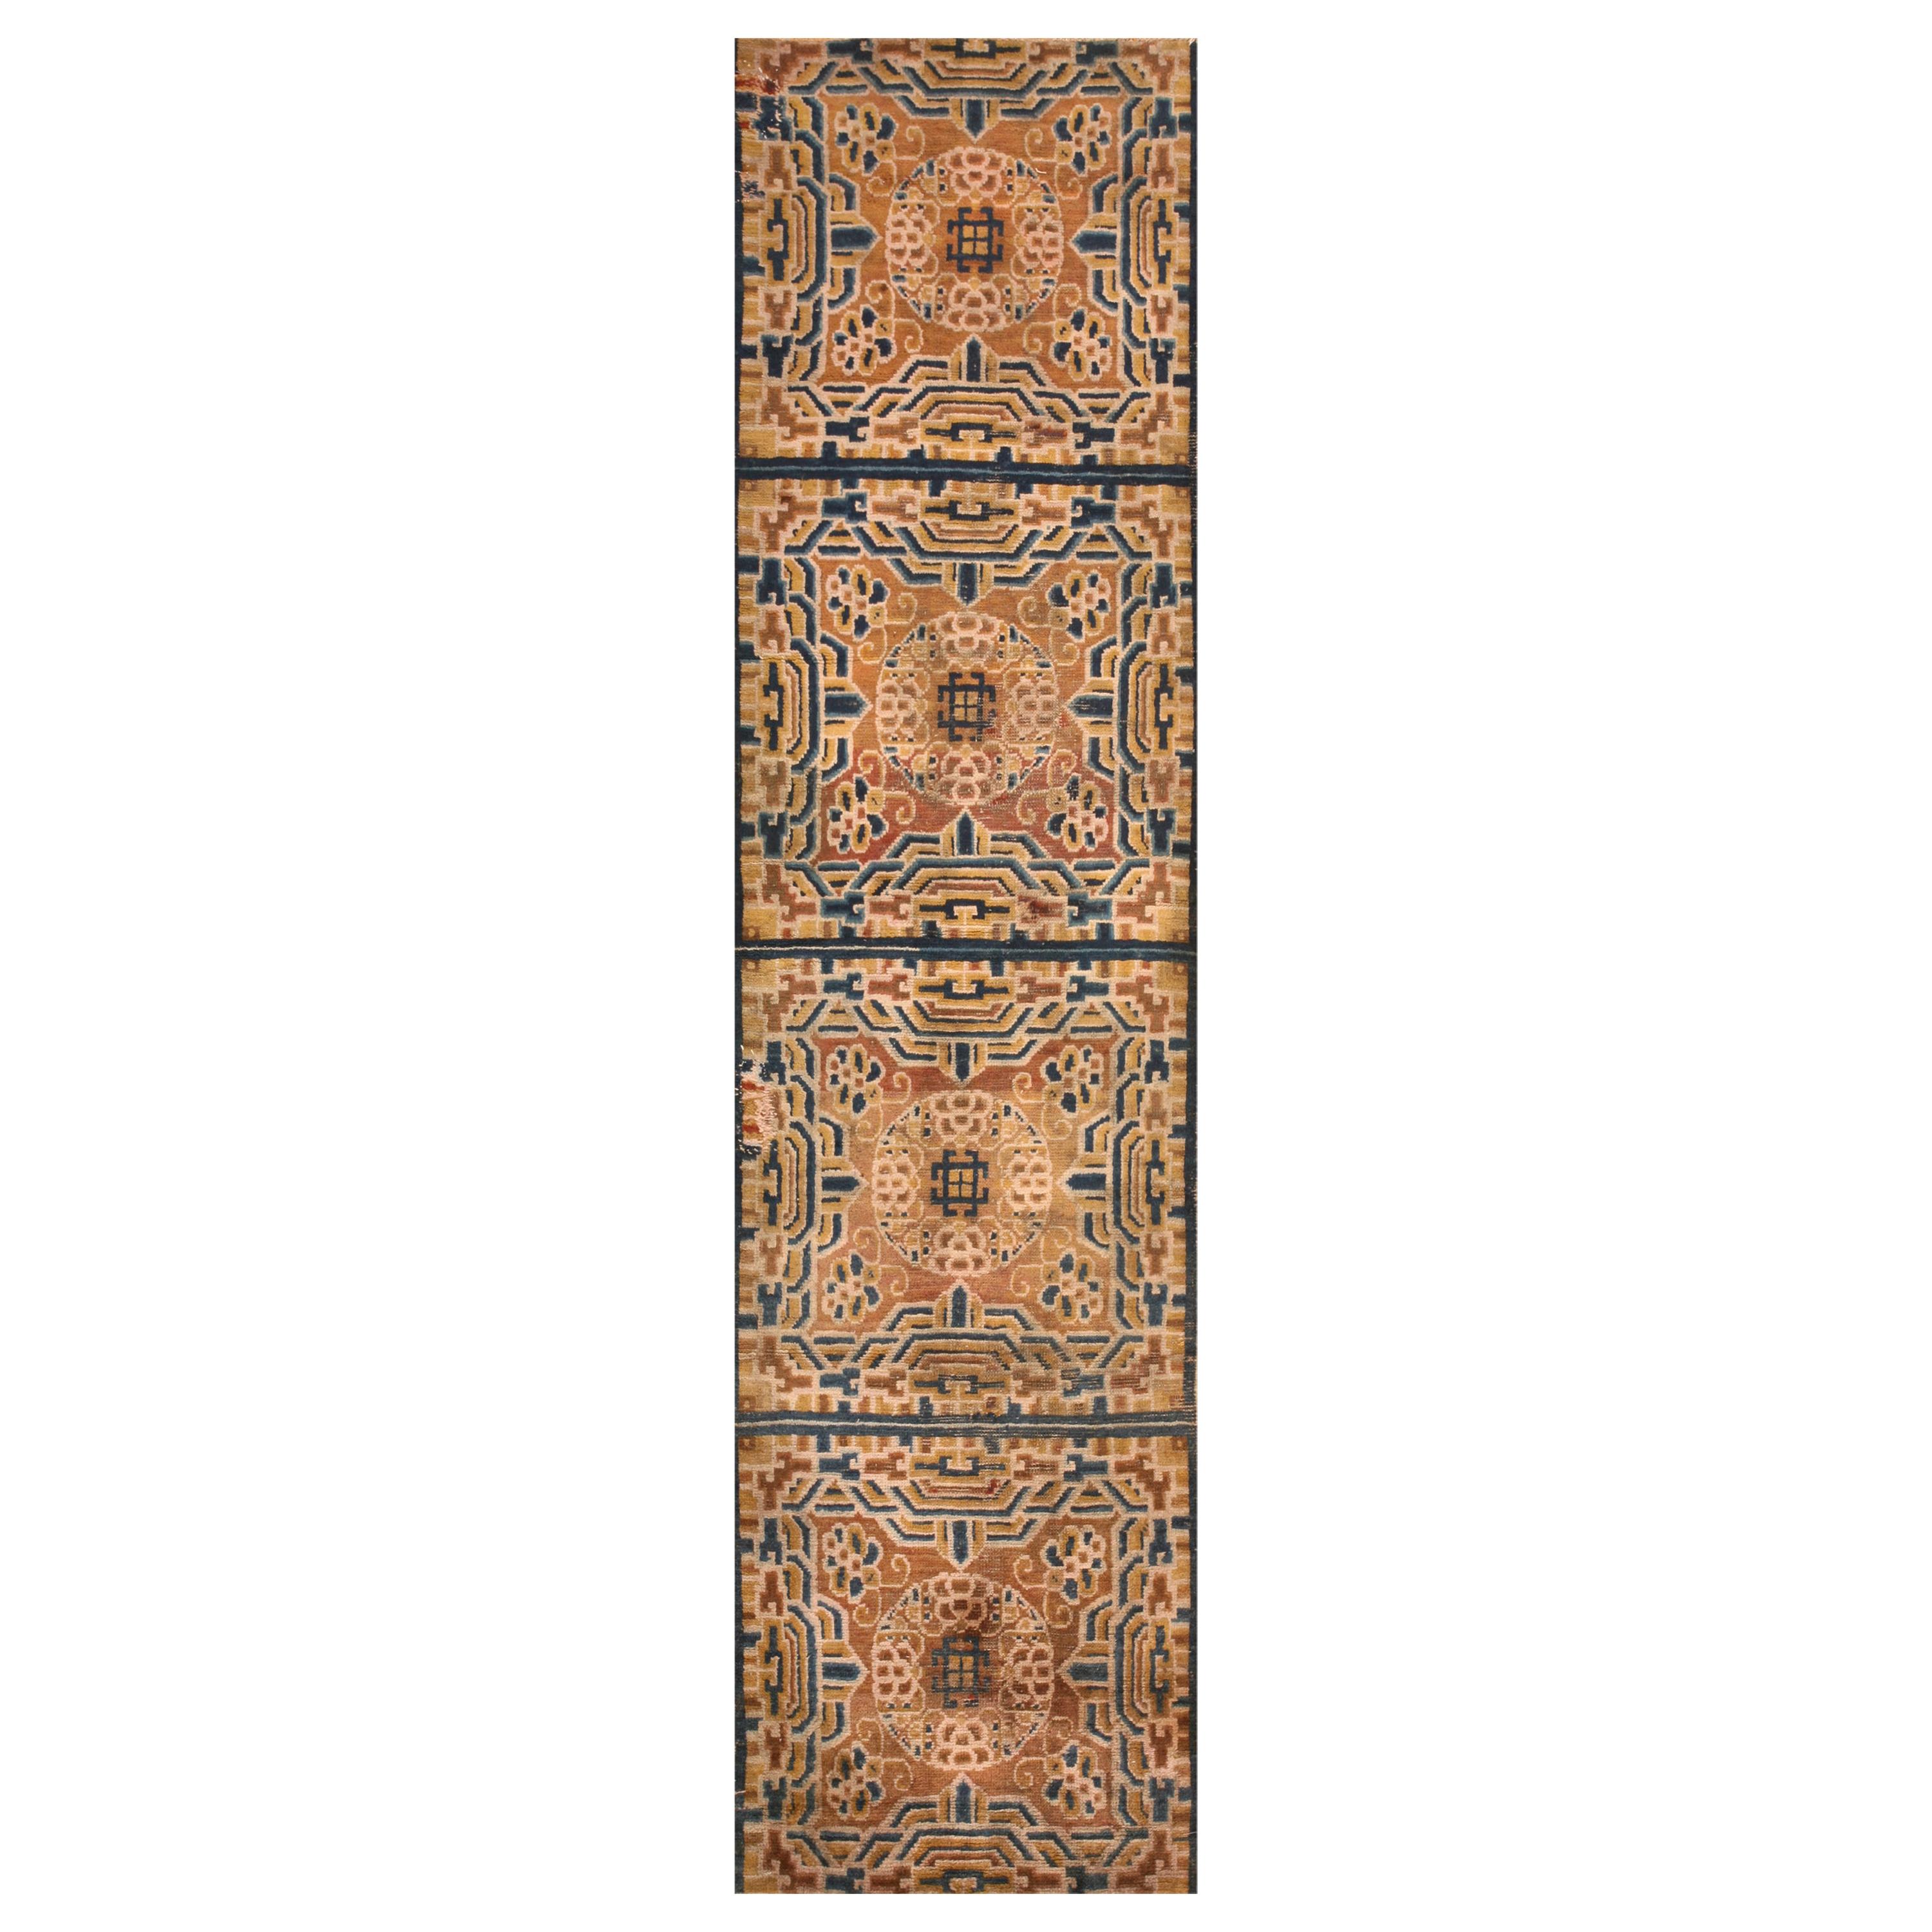 Late 19th Century Chinese Ningxia Carpet ( 2'4" x 9' - 72 x 275 )